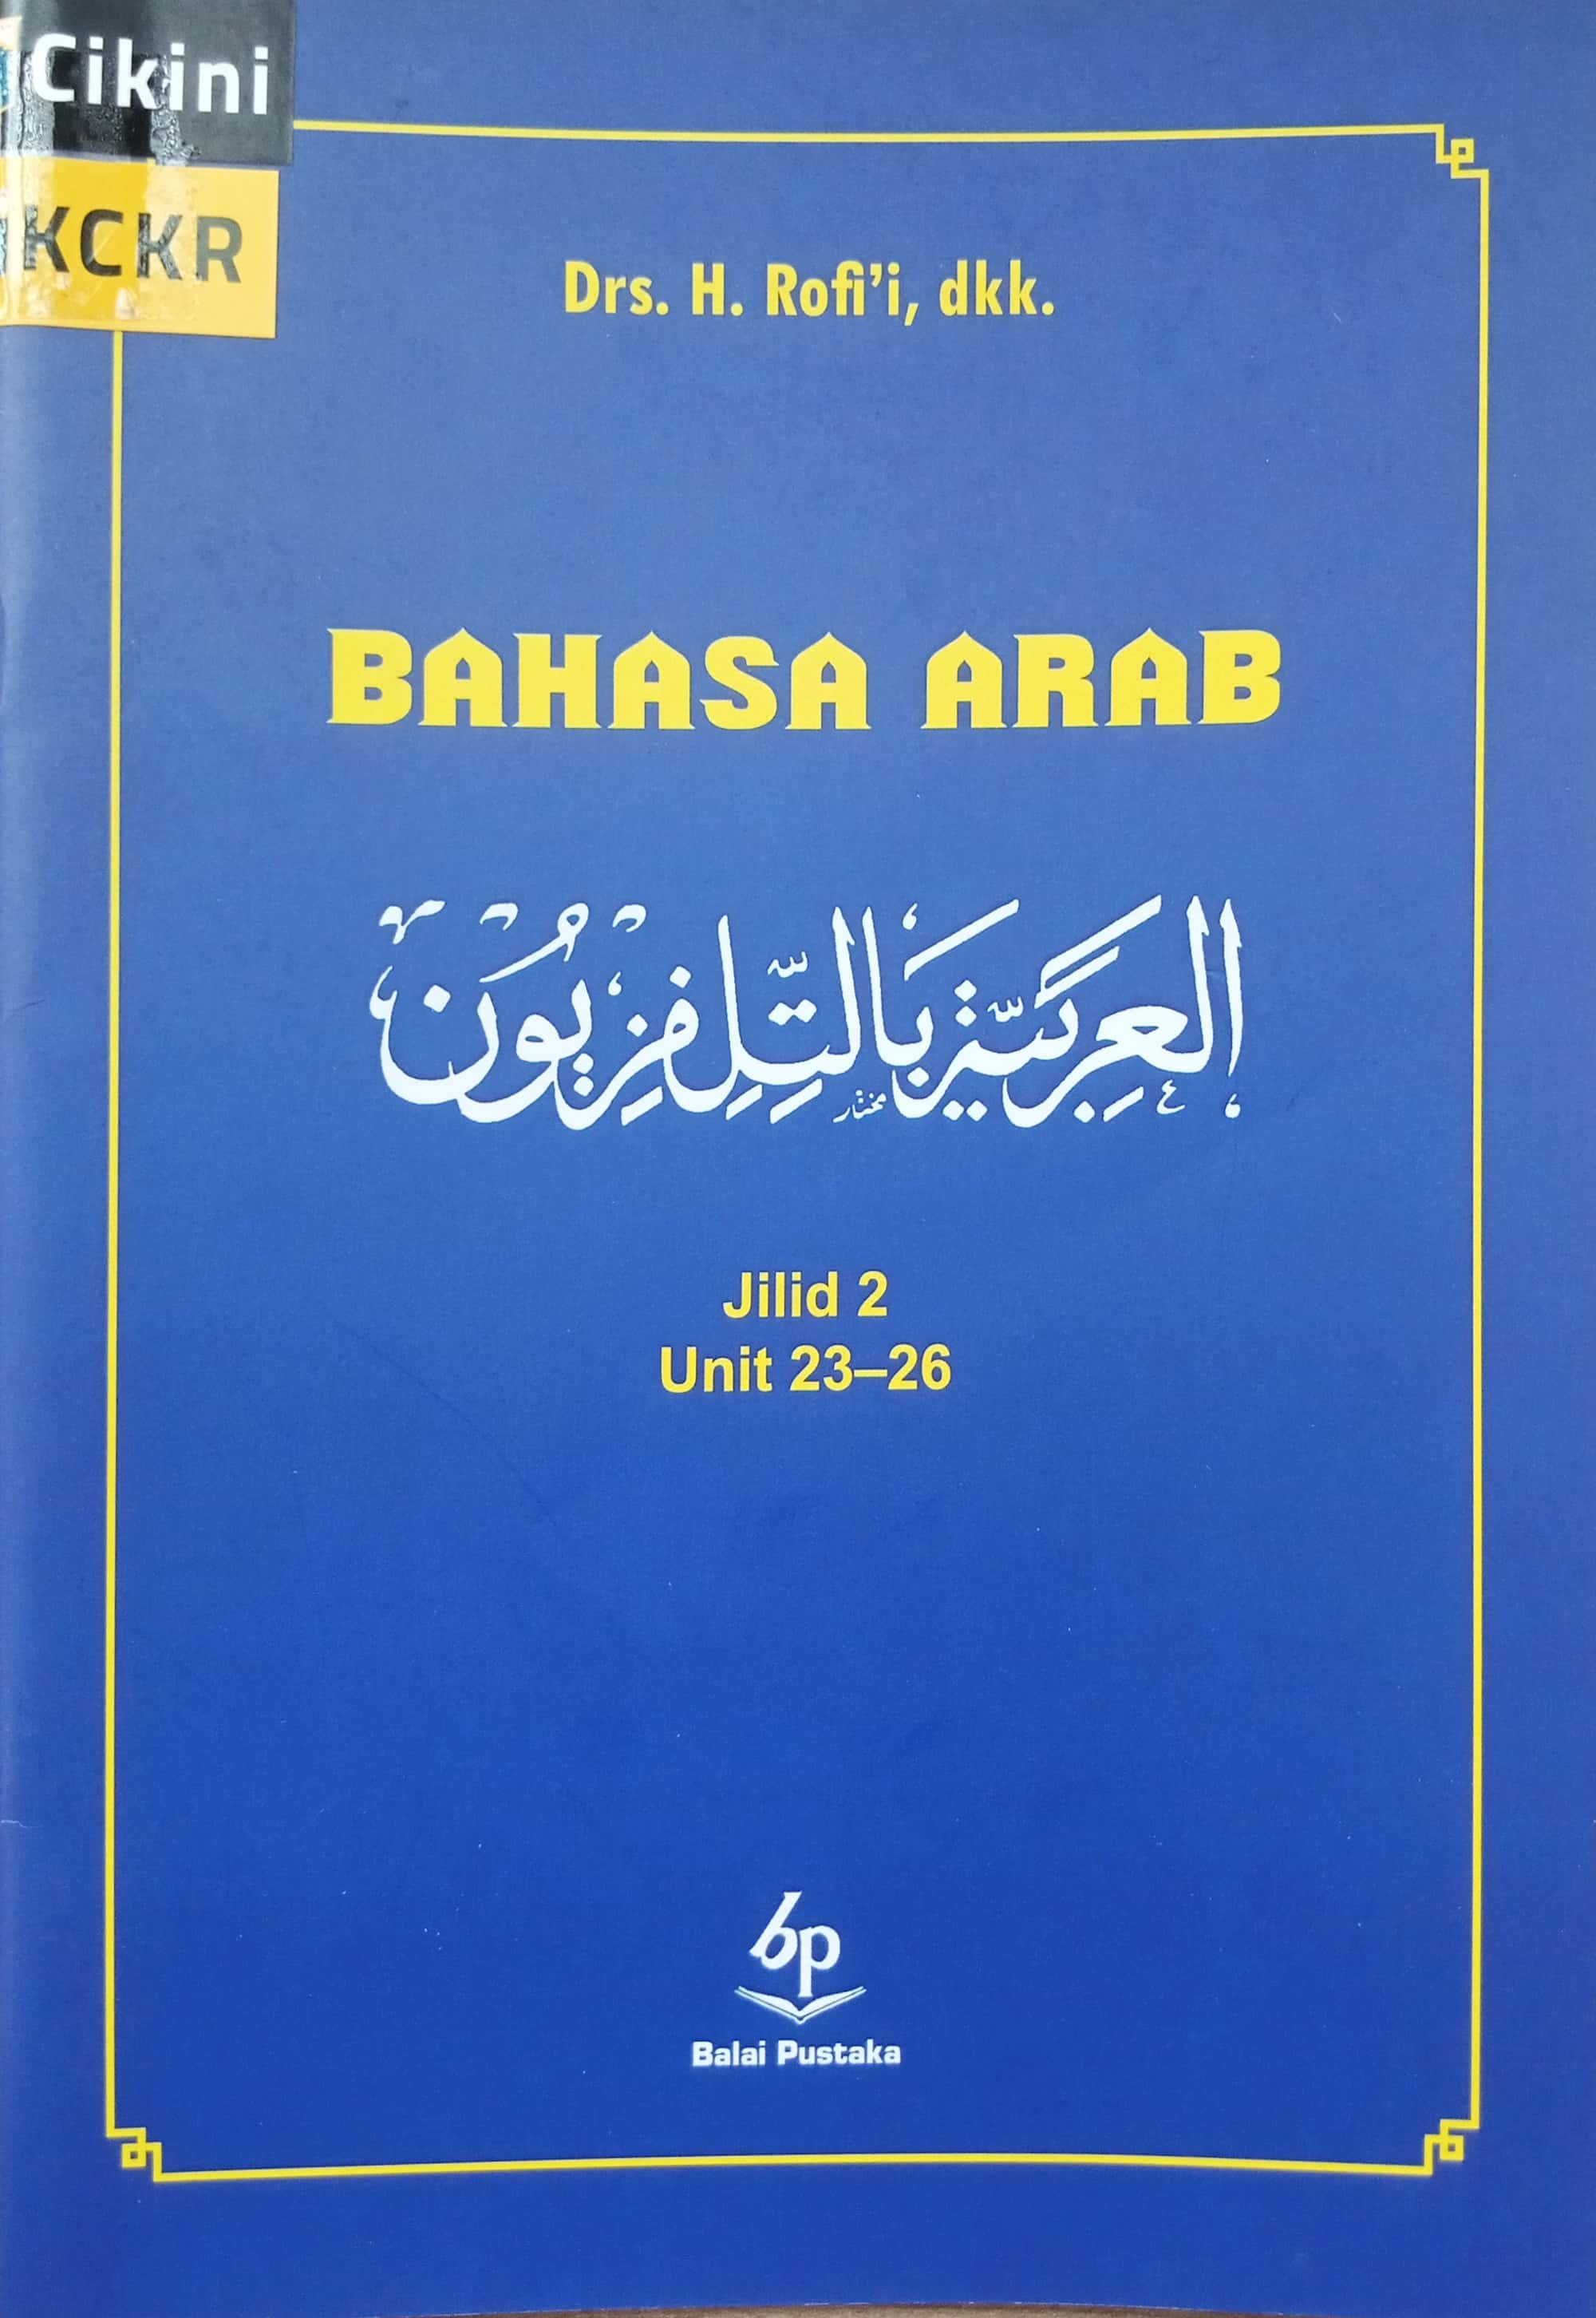 Bahasa Arab jilid 3 unit 23-26